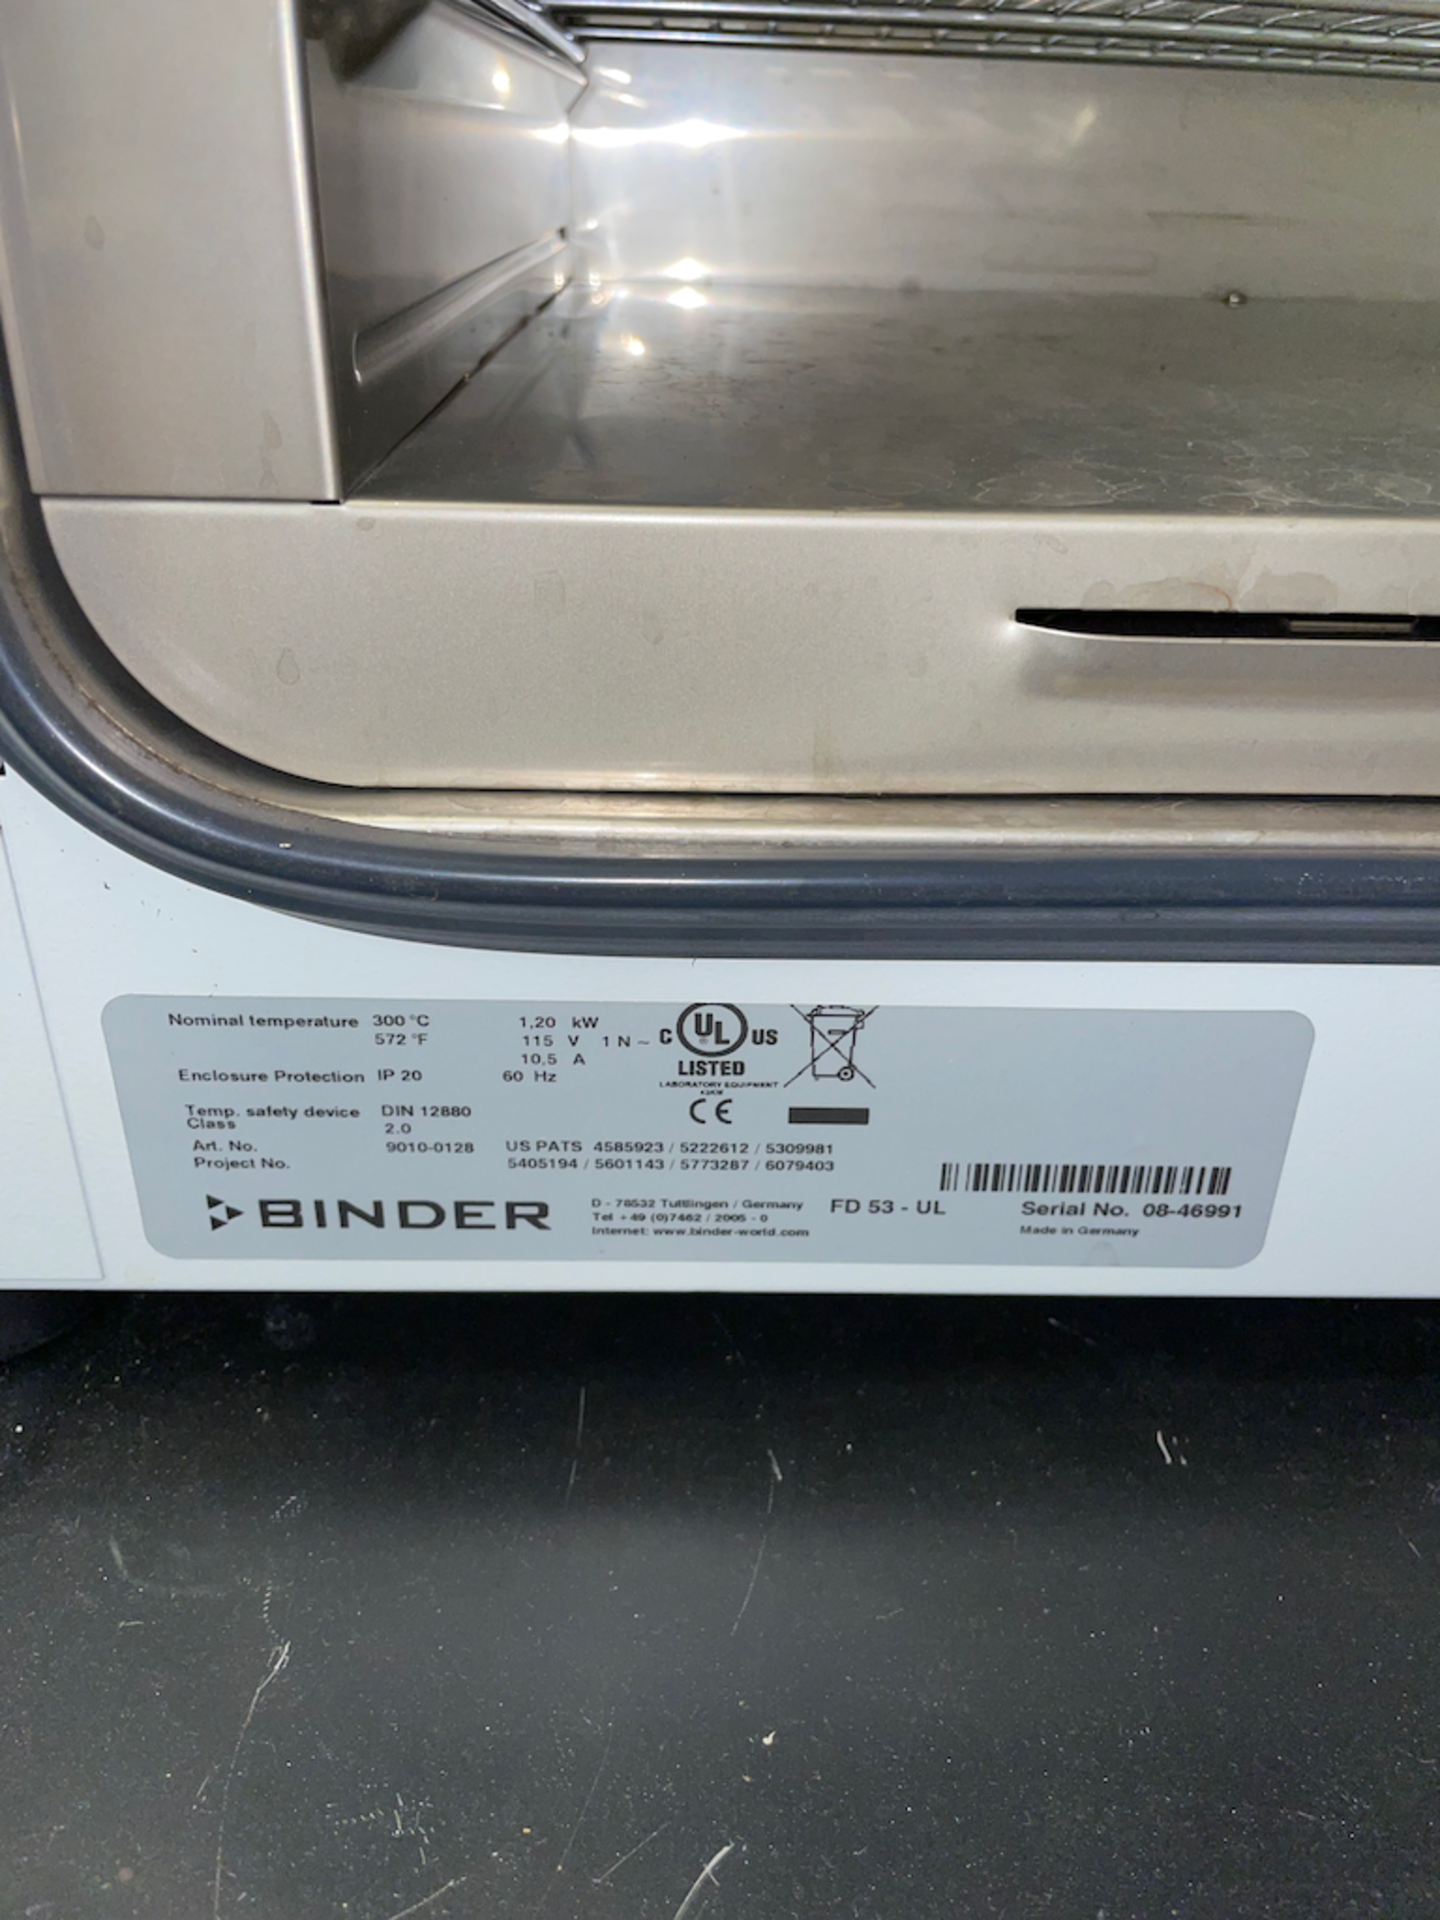 BINDER FD 53 - UL 300 / 572F Oven SN/ 08-46991 - Image 4 of 4